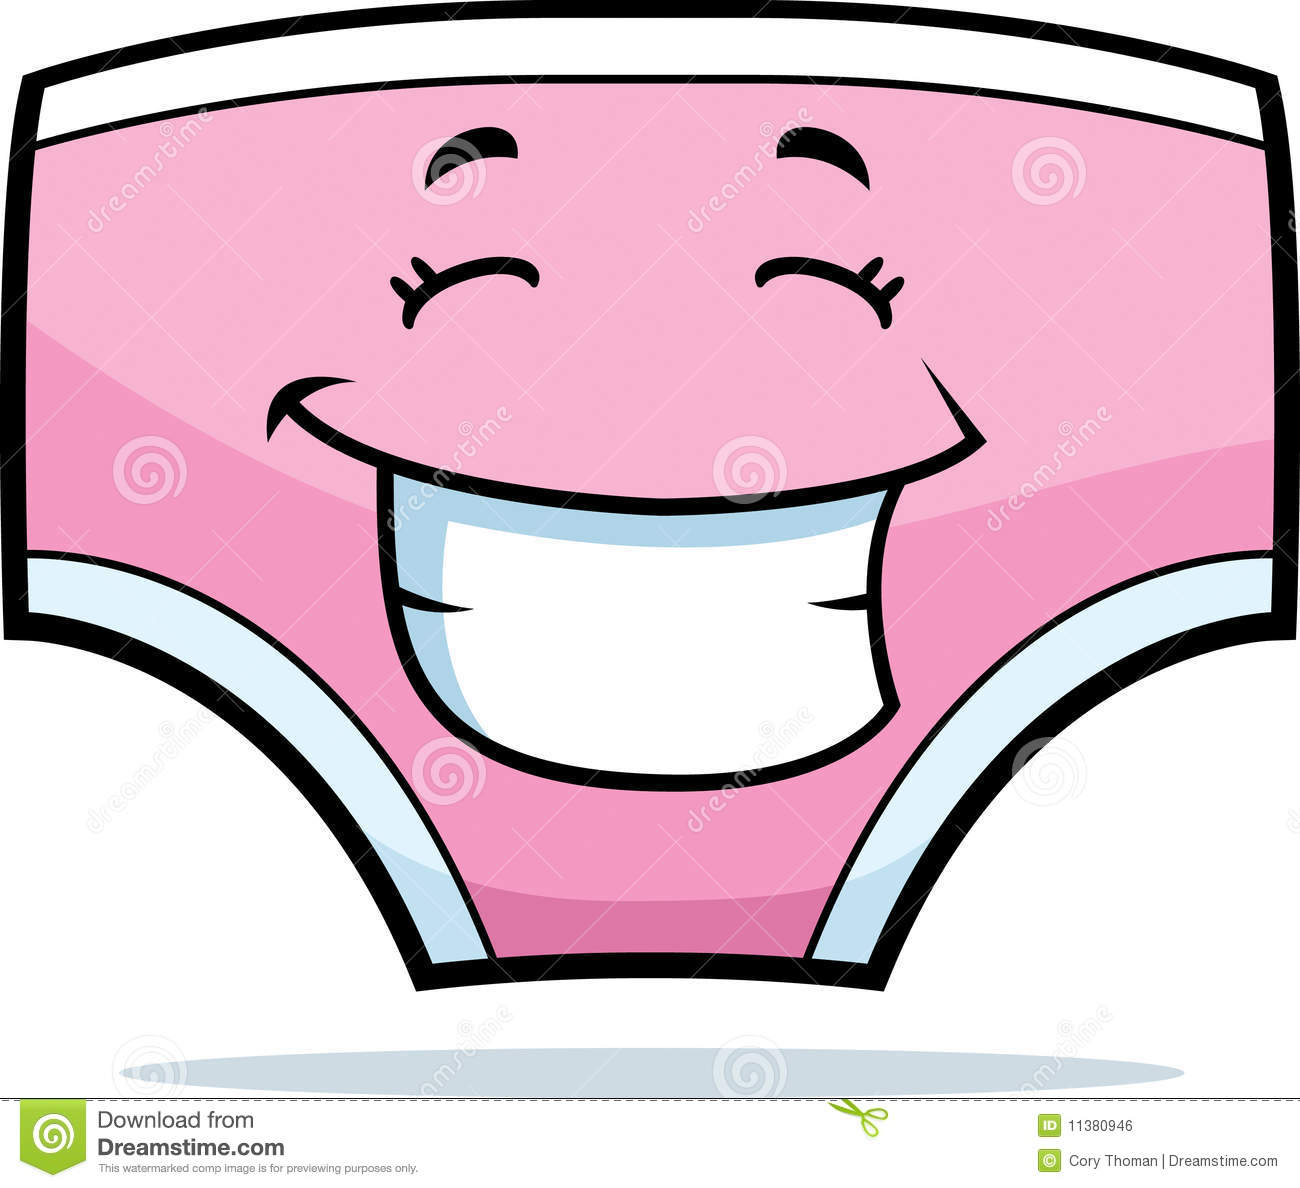 Underwear Smiling Royalty Free Stock Image   Image  11380946